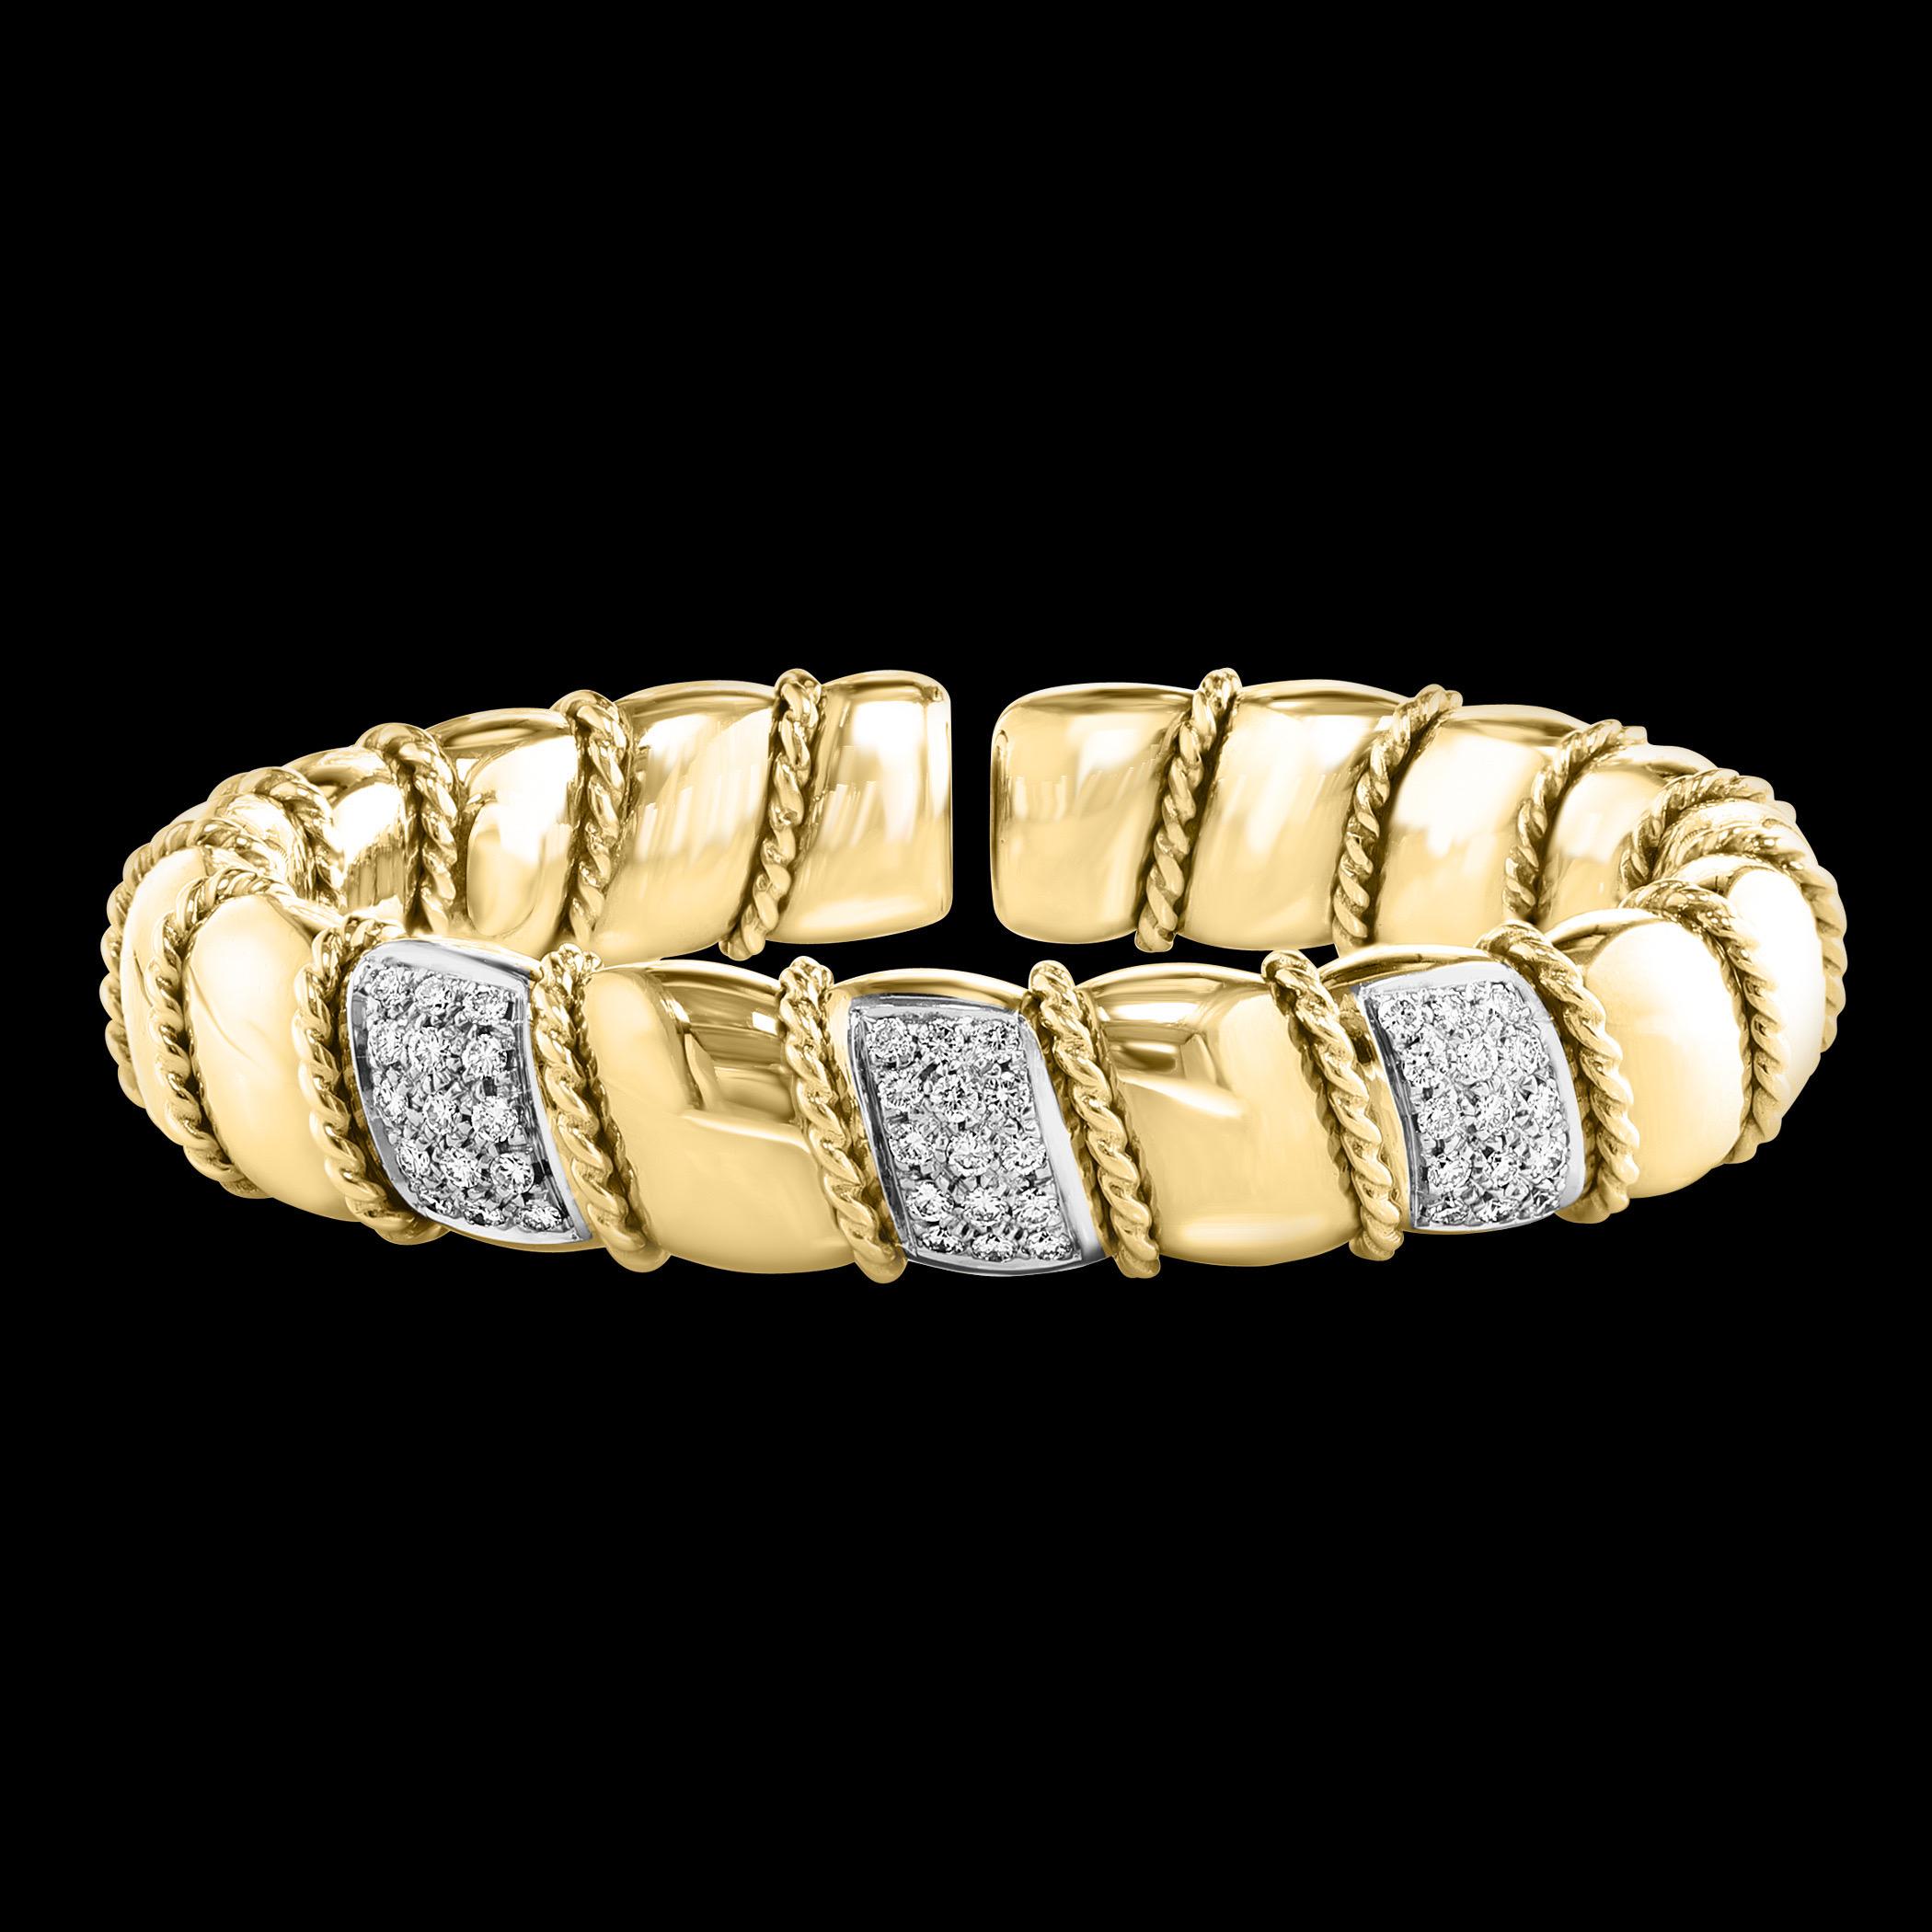 Vintage 2 Carats Diamond Cuff Bangle Bracelet 18 Karat Solid Yellow Gold 75 Gram For Sale 6